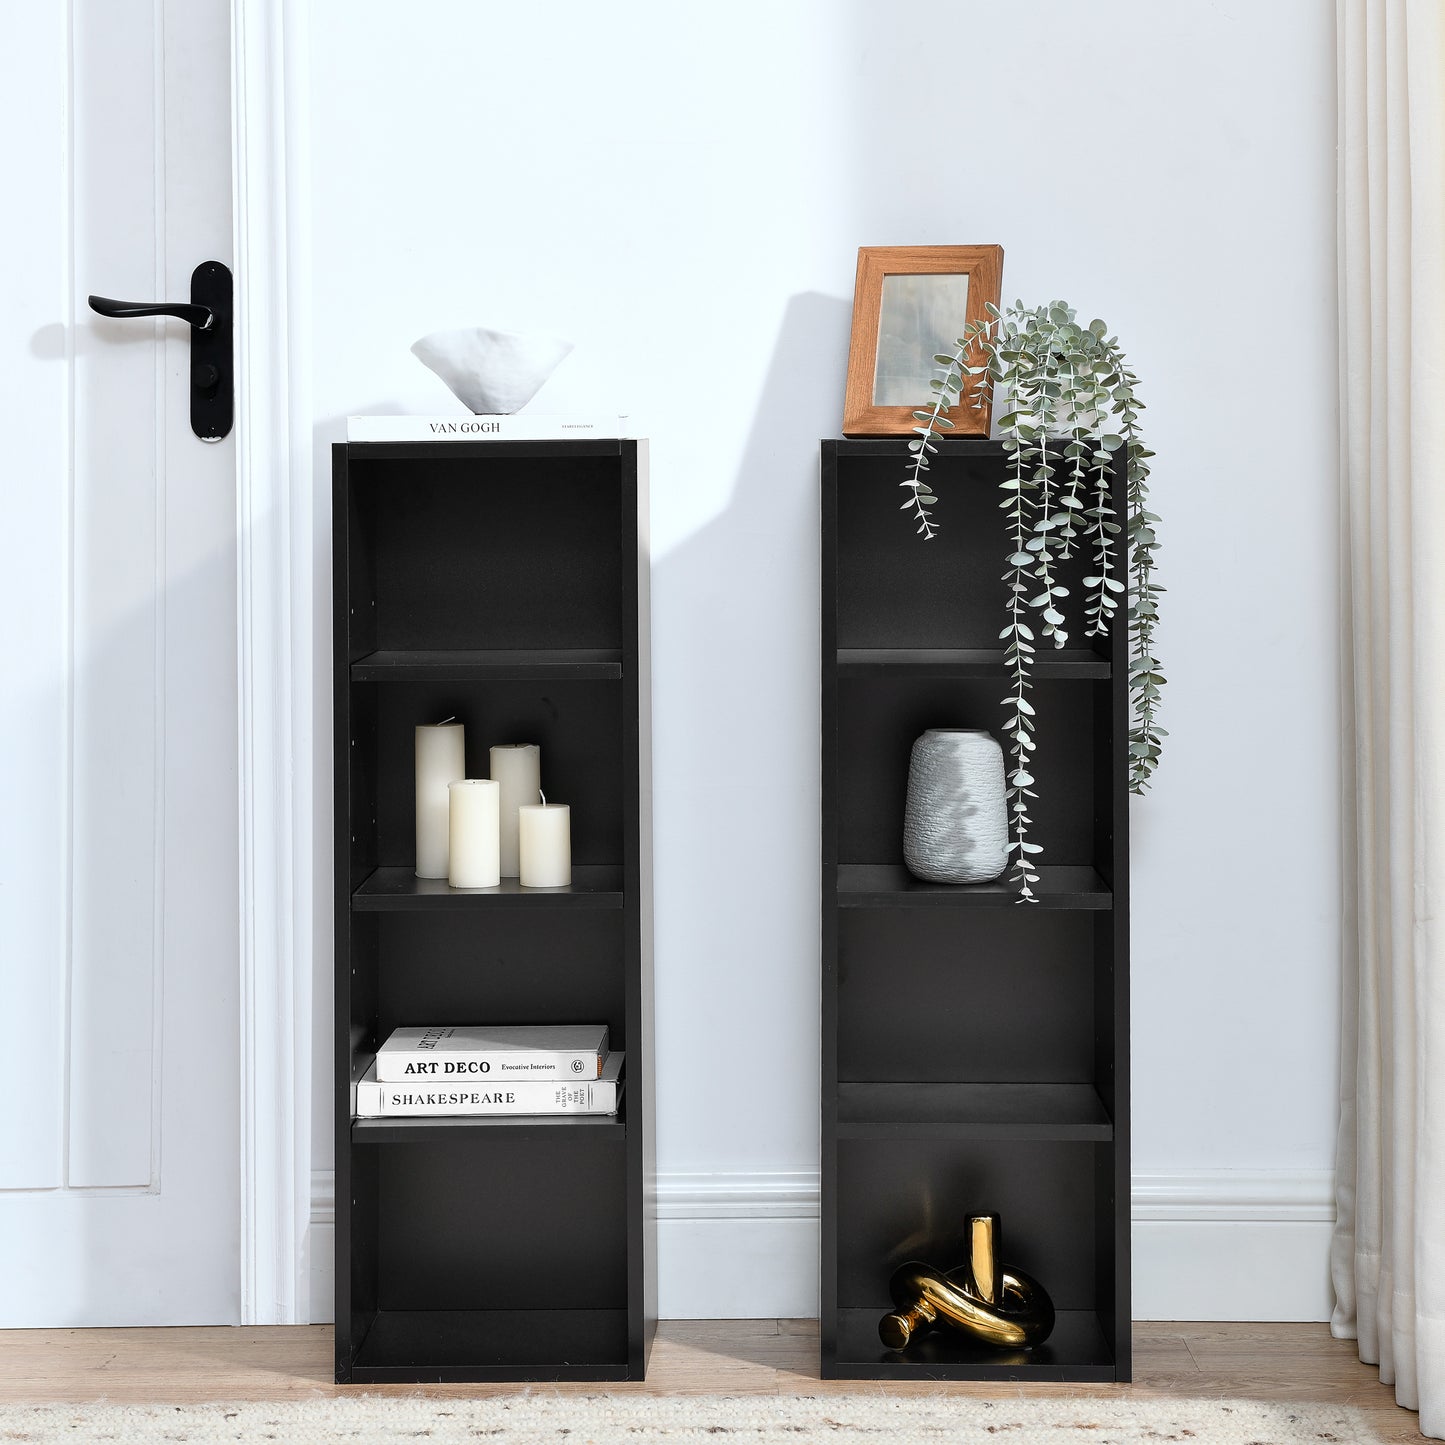 Slim Storage Cabinet with Adjustable Shelves for Home Office